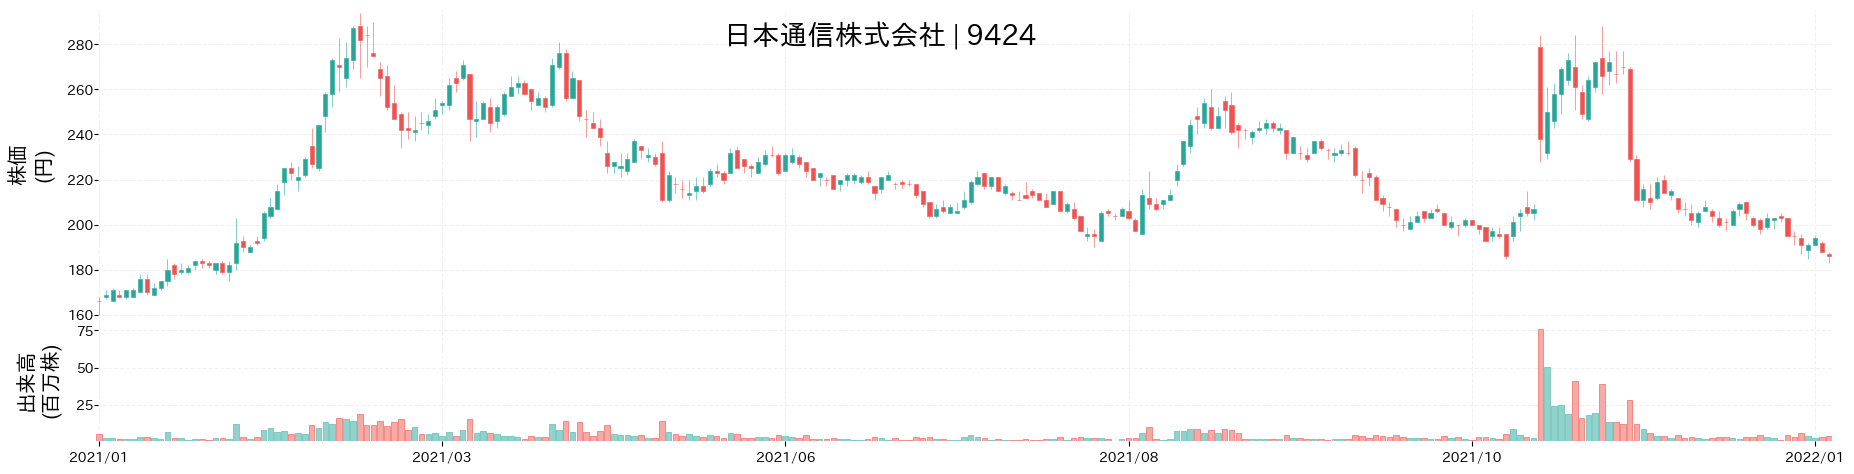 日本通信の株価推移(2021)